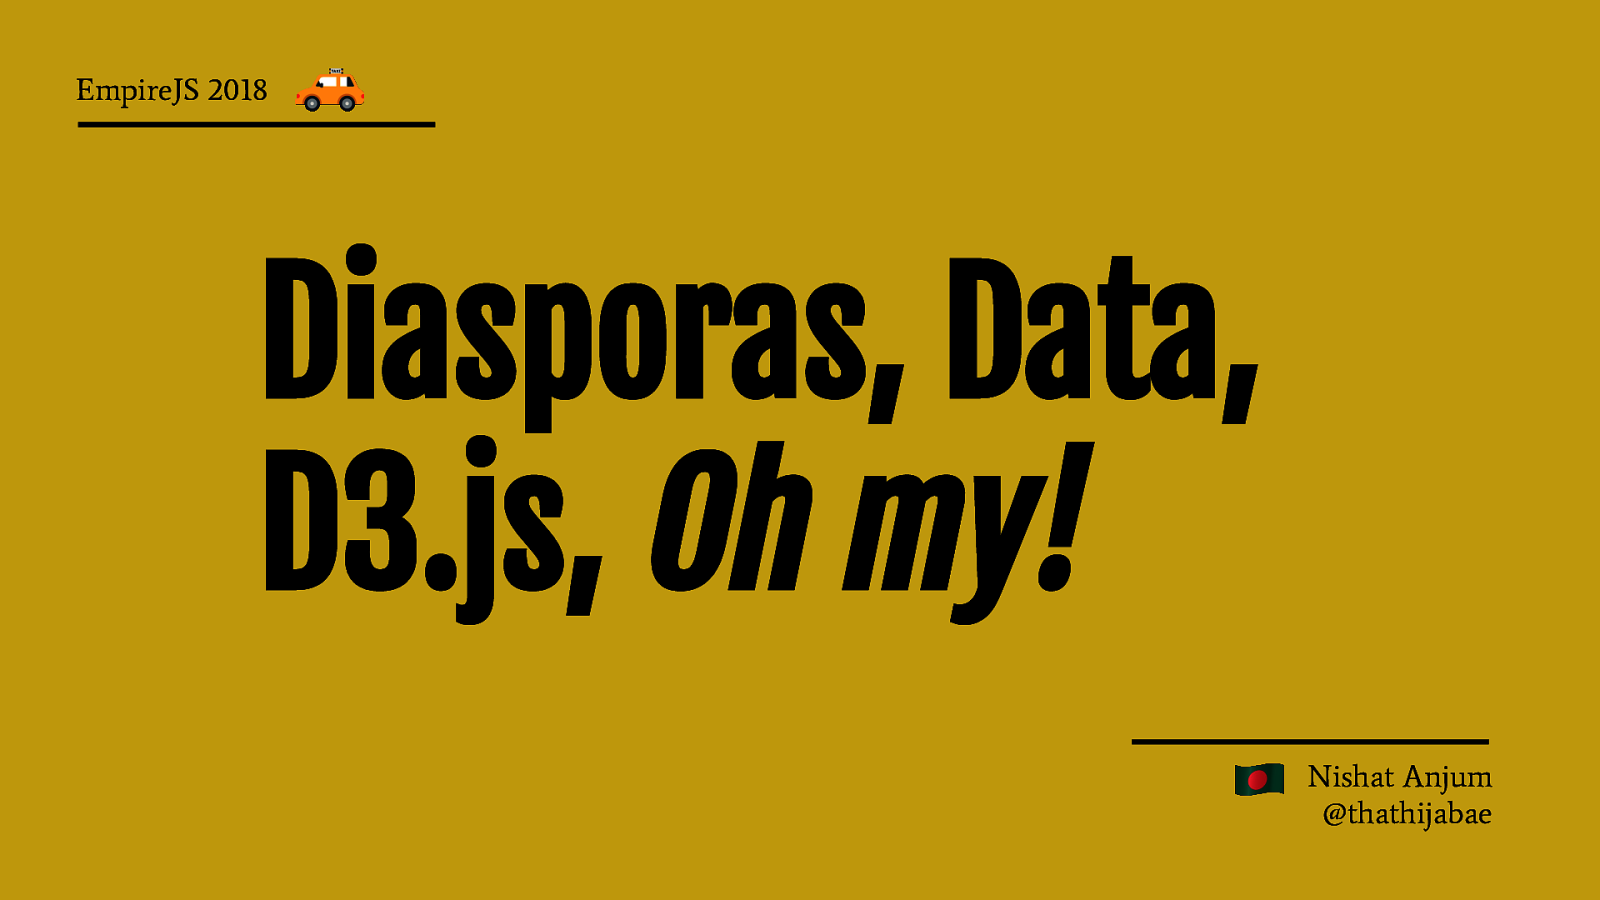 Diasporas, Data, D3.js, Oh my!